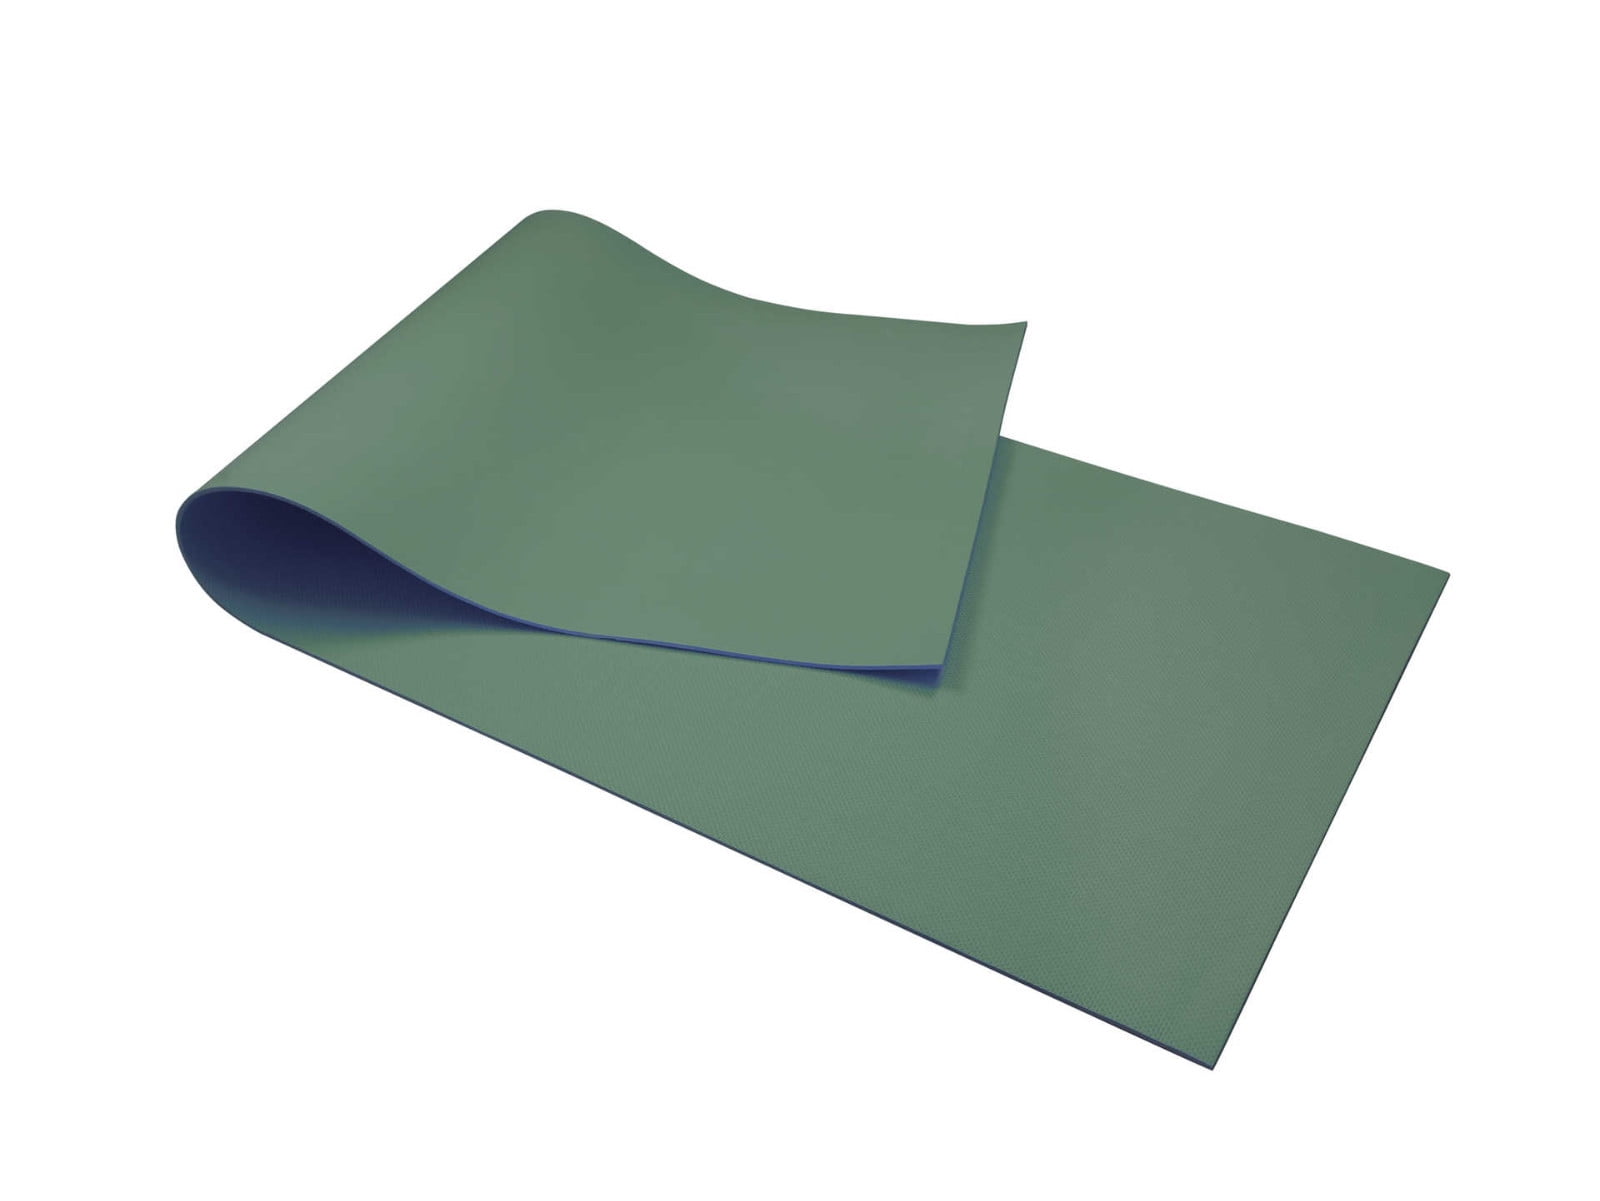  LIYUDL EVA Foam Yoga Pad, 4mm Thickness Non-Slip